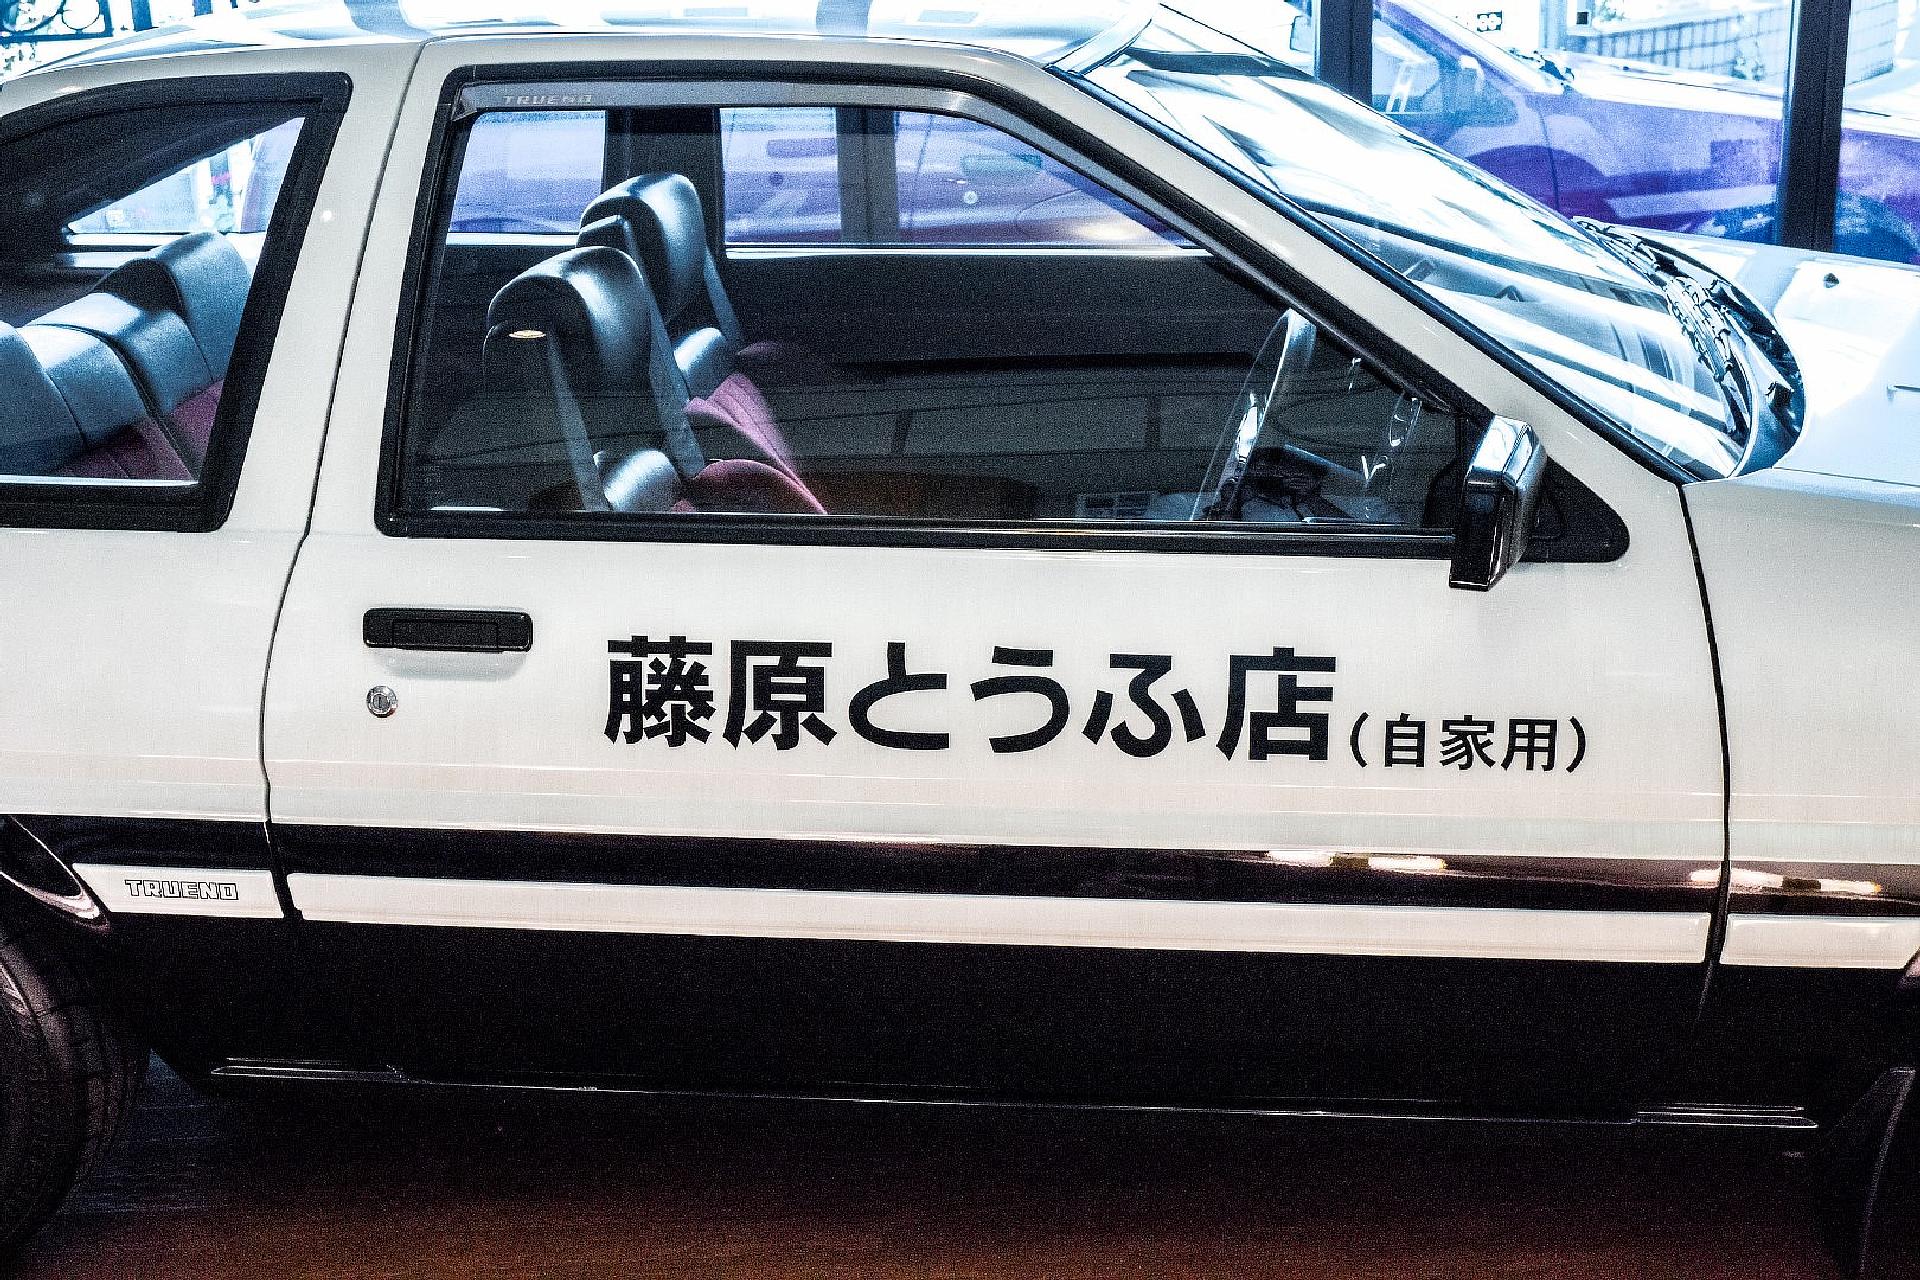 Toyota Sprinter Trueno AE86 (Takumi Fujiwara's car in 